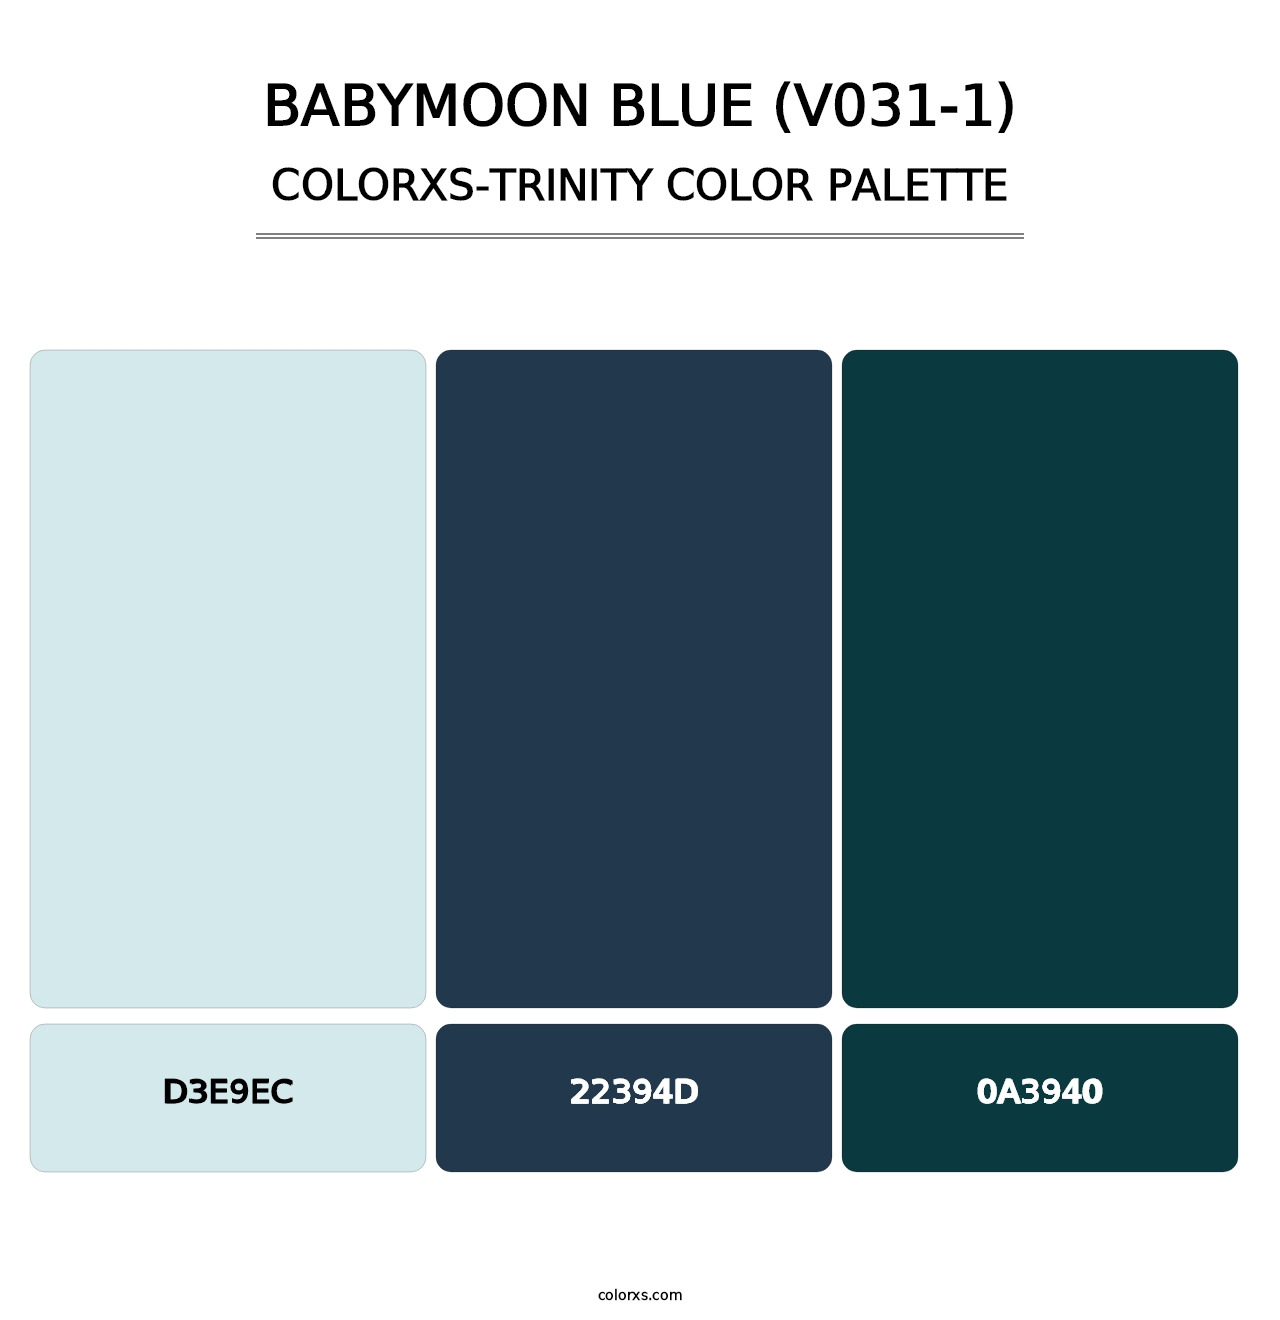 Babymoon Blue (V031-1) - Colorxs Trinity Palette